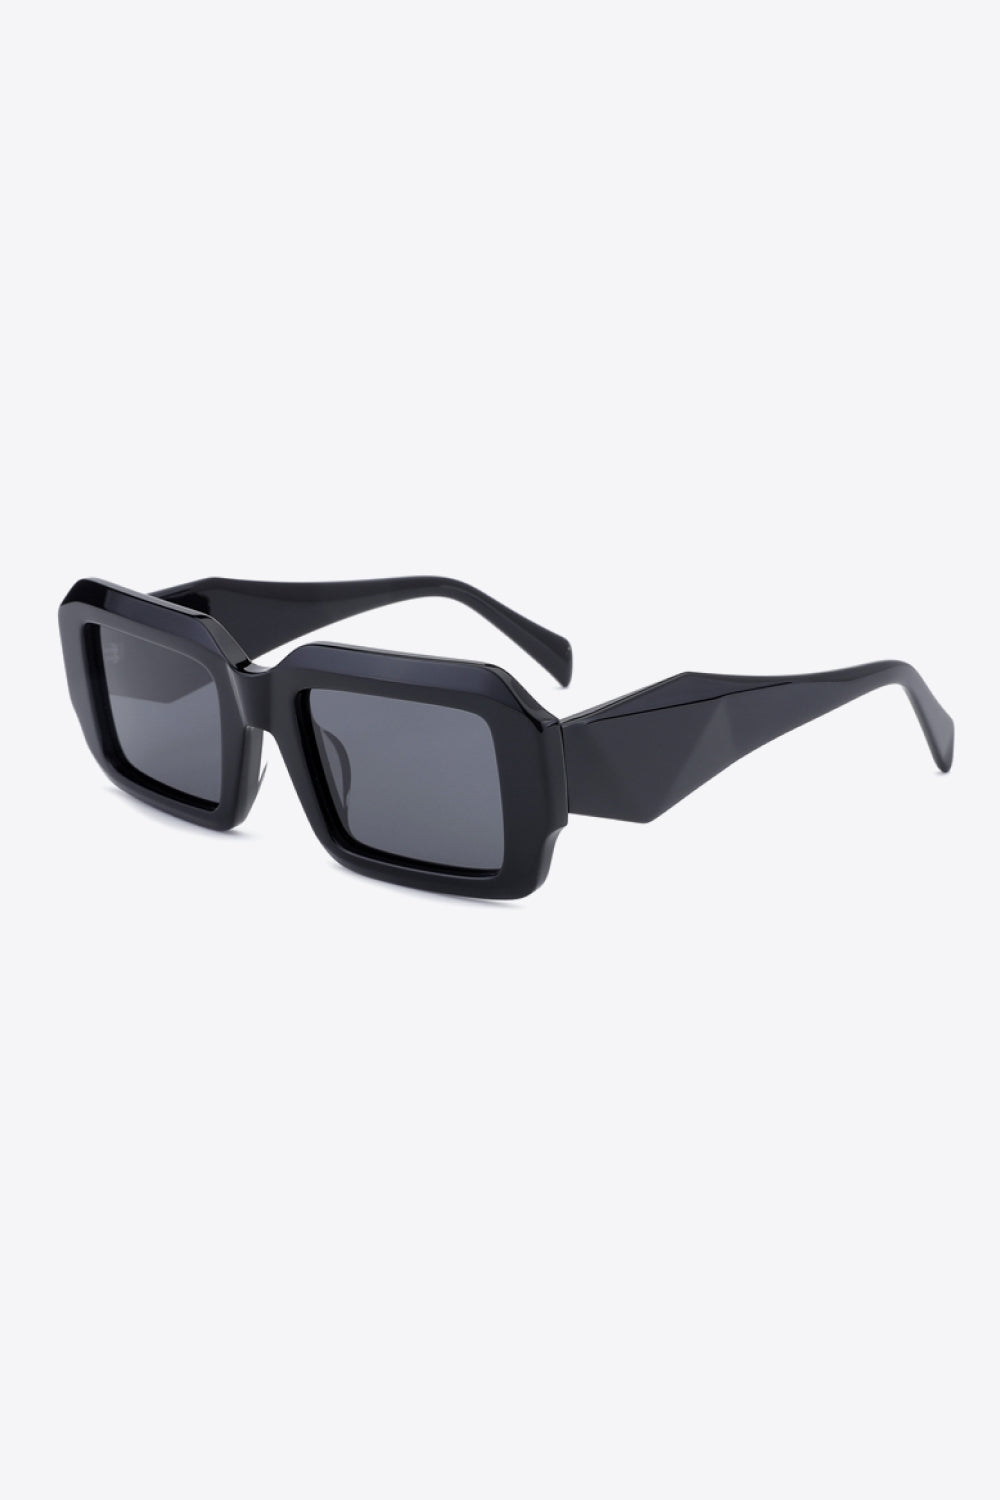 Rectangle TAC Polarization Lens Full Rim Sunglasses Black One Size Sunglasses by Vim&Vigor | Vim&Vigor Boutique